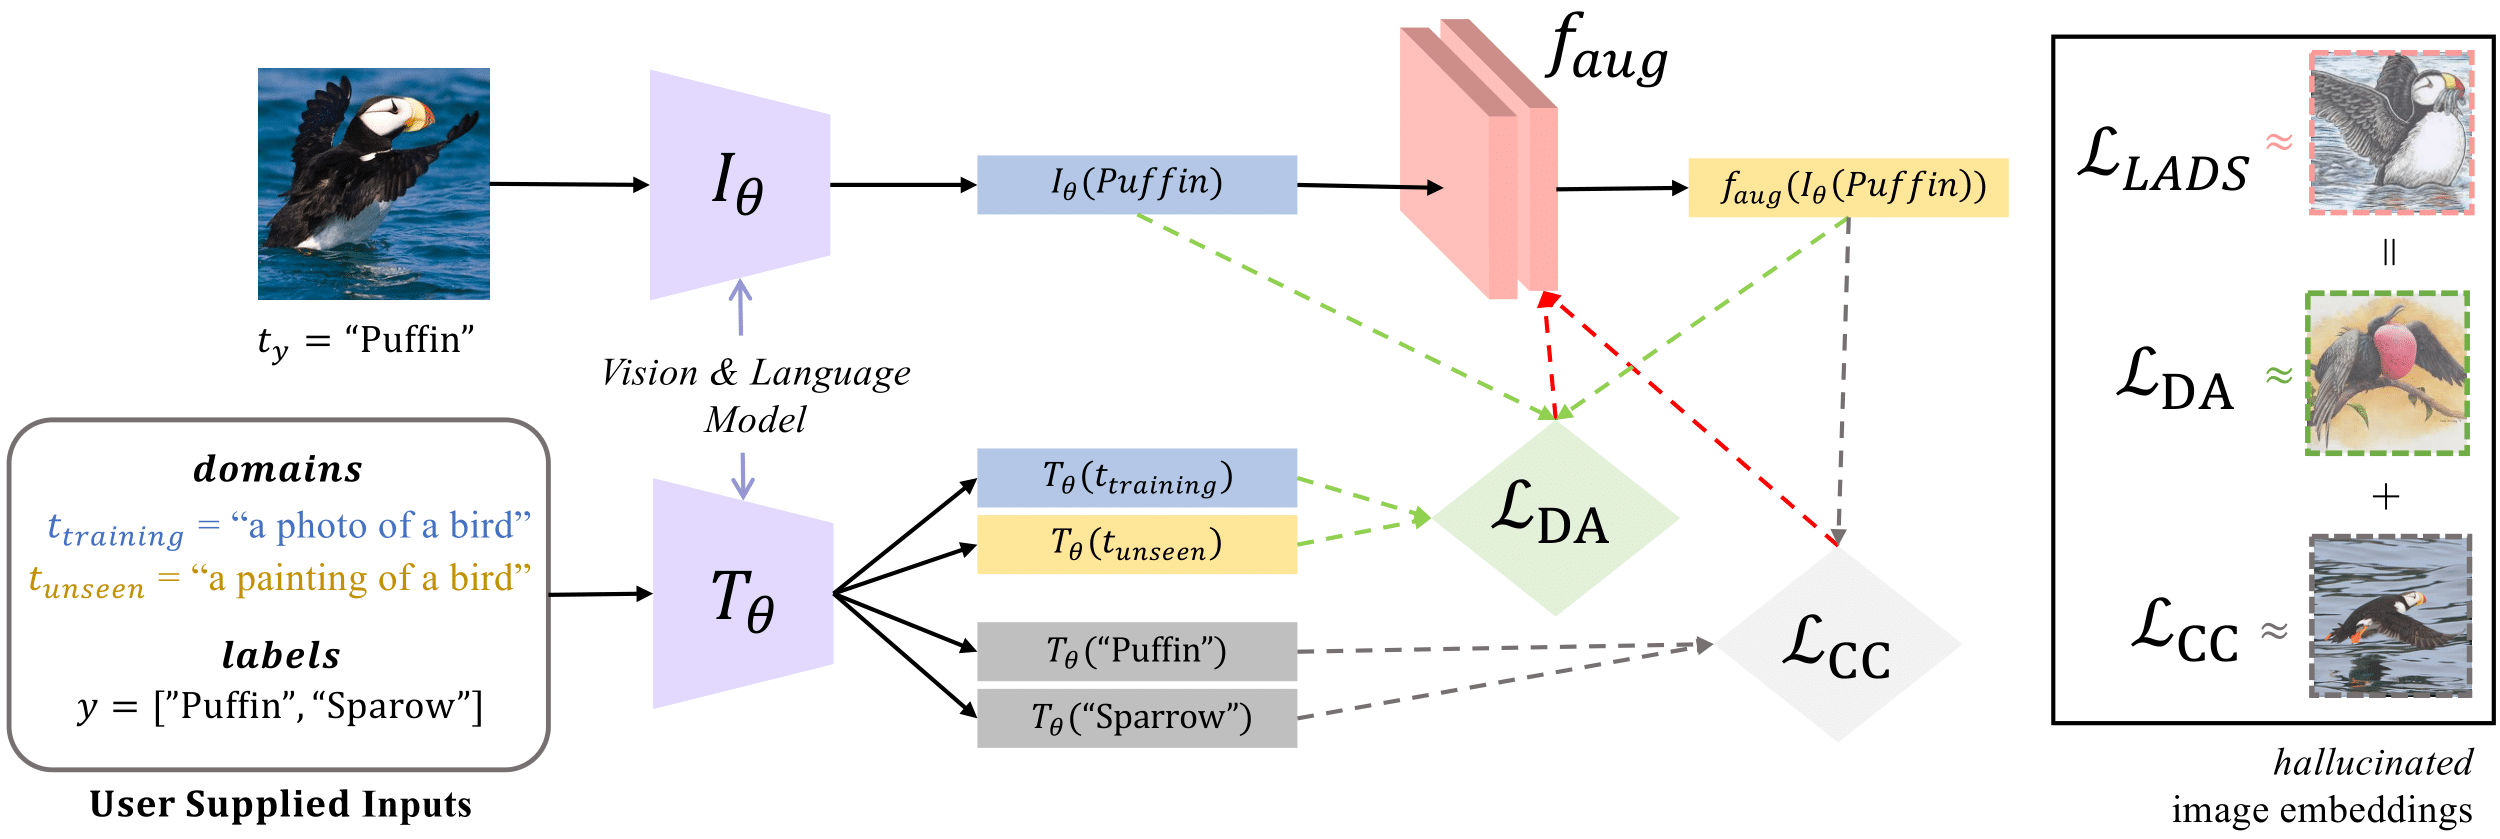 LADS method overview.